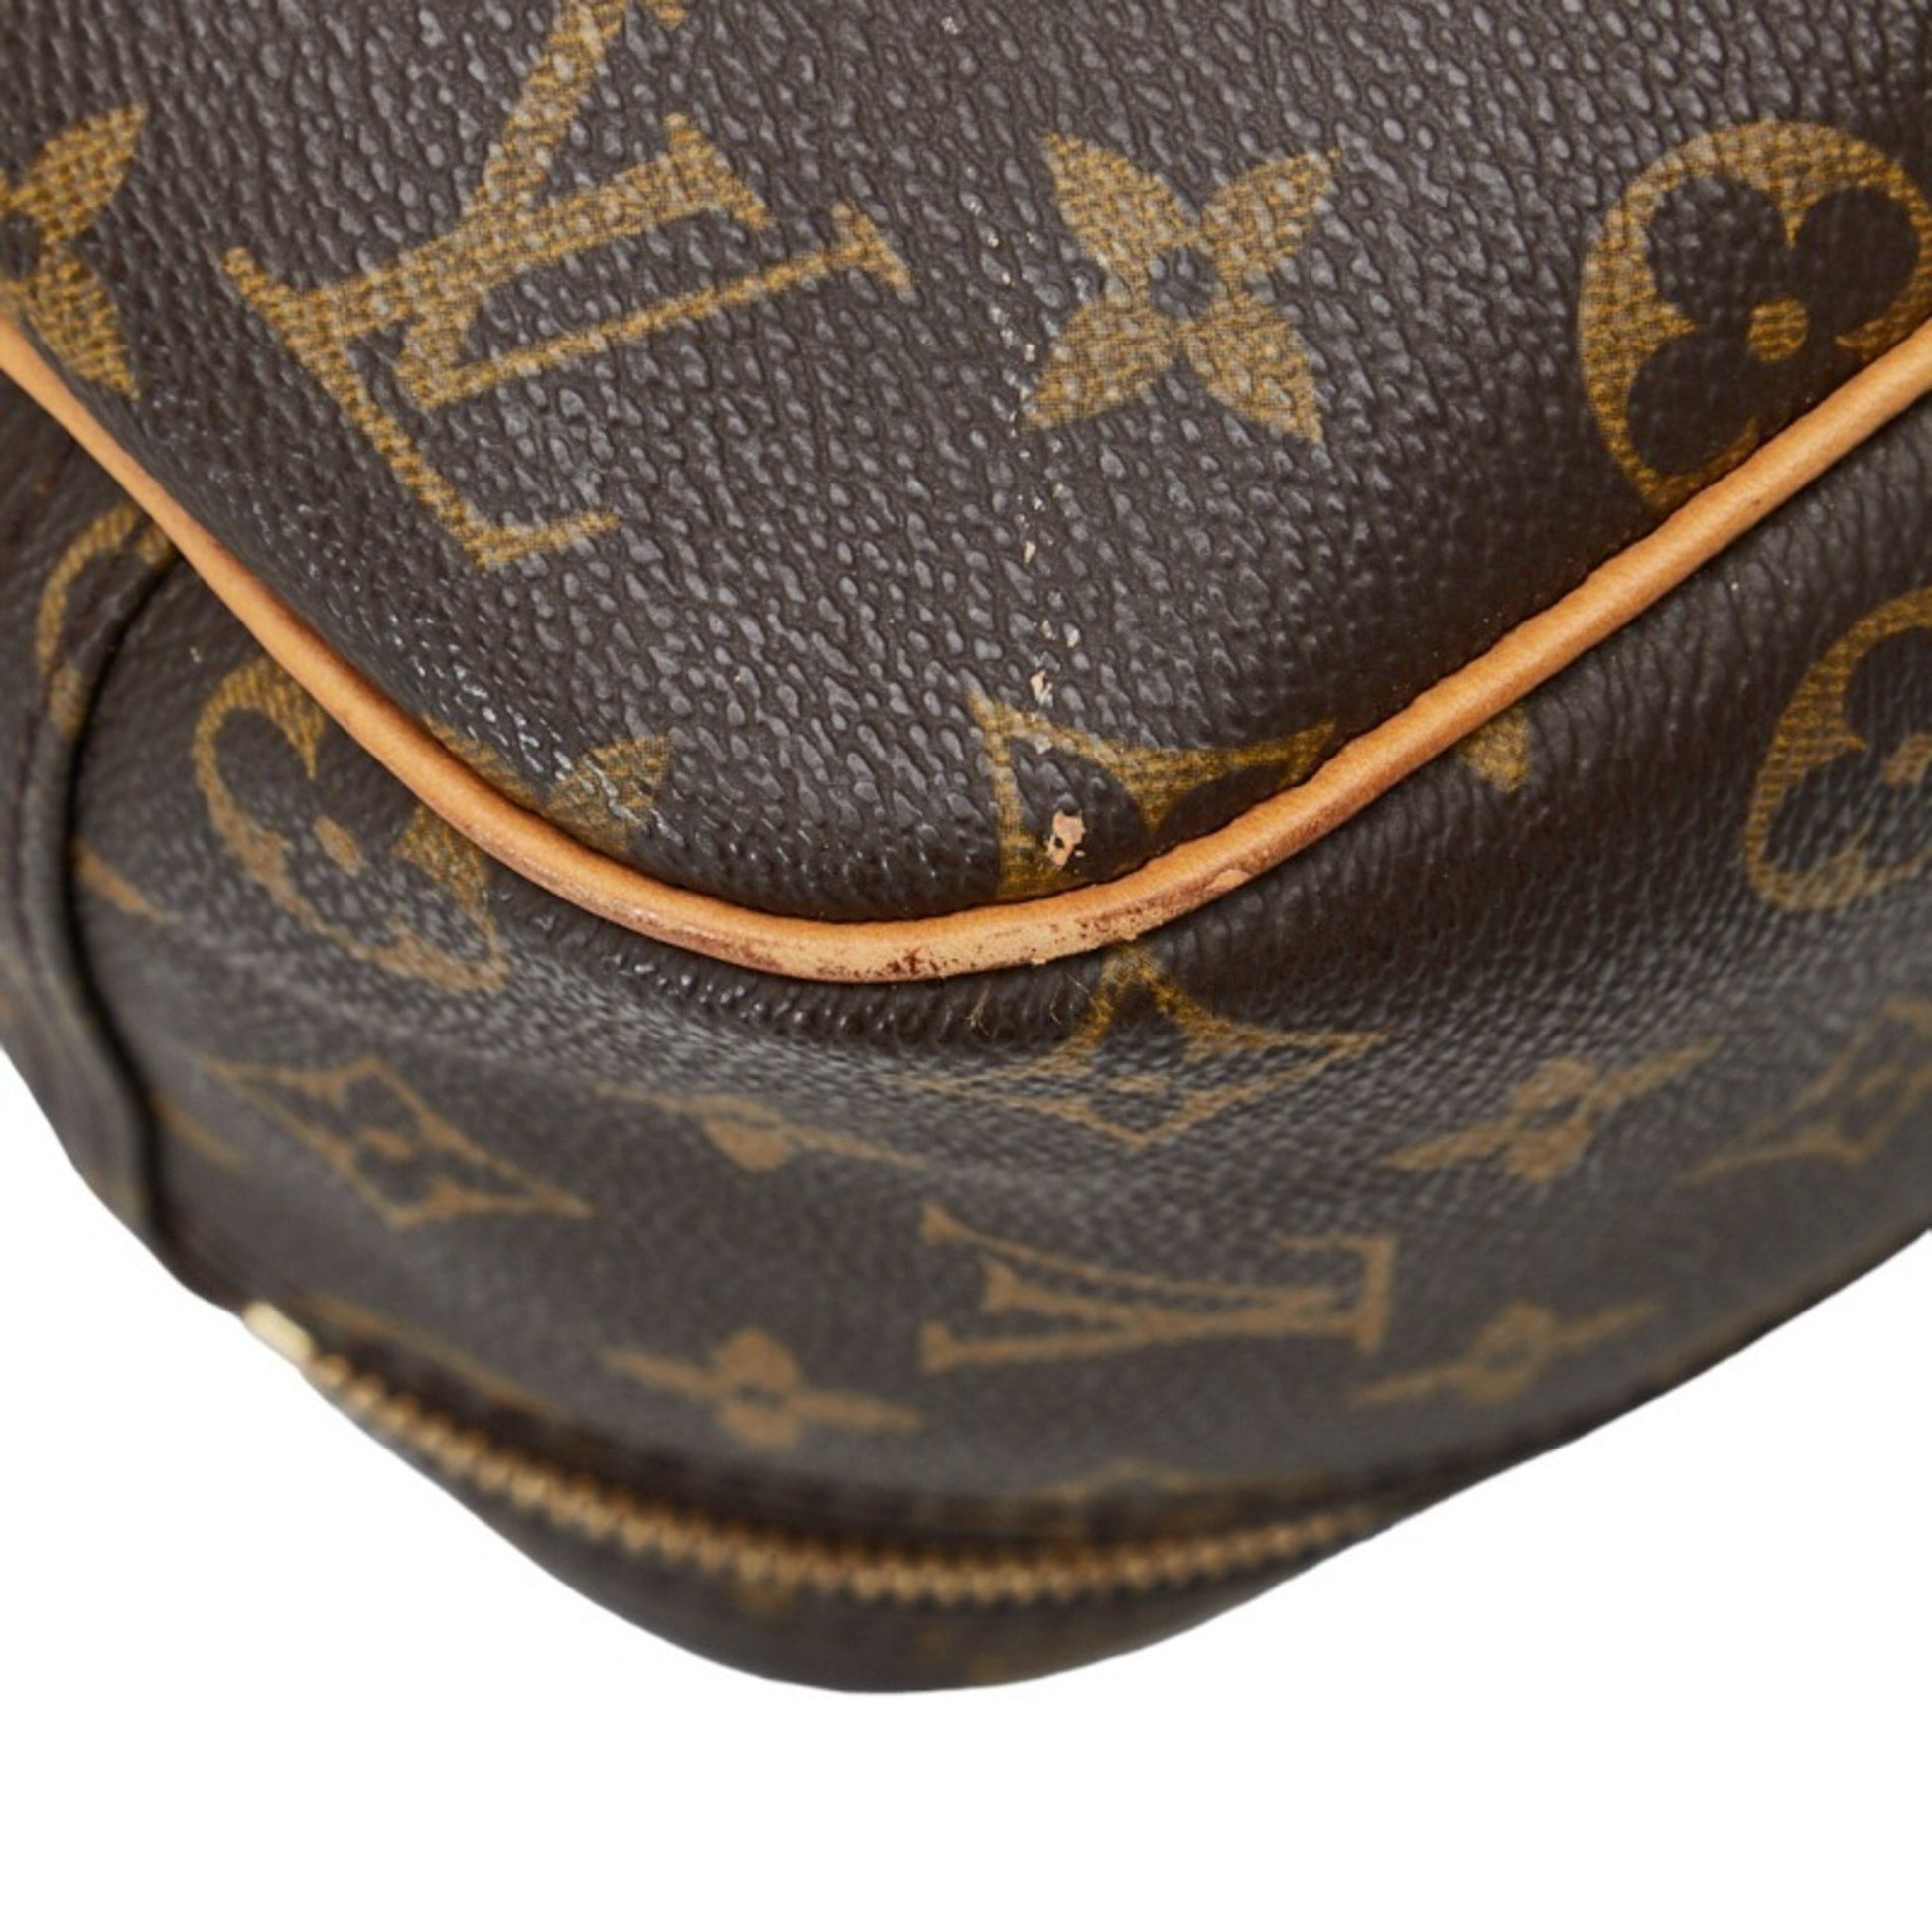 Louis Vuitton Monogram Excursion Handbag M41450 Brown PVC Leather